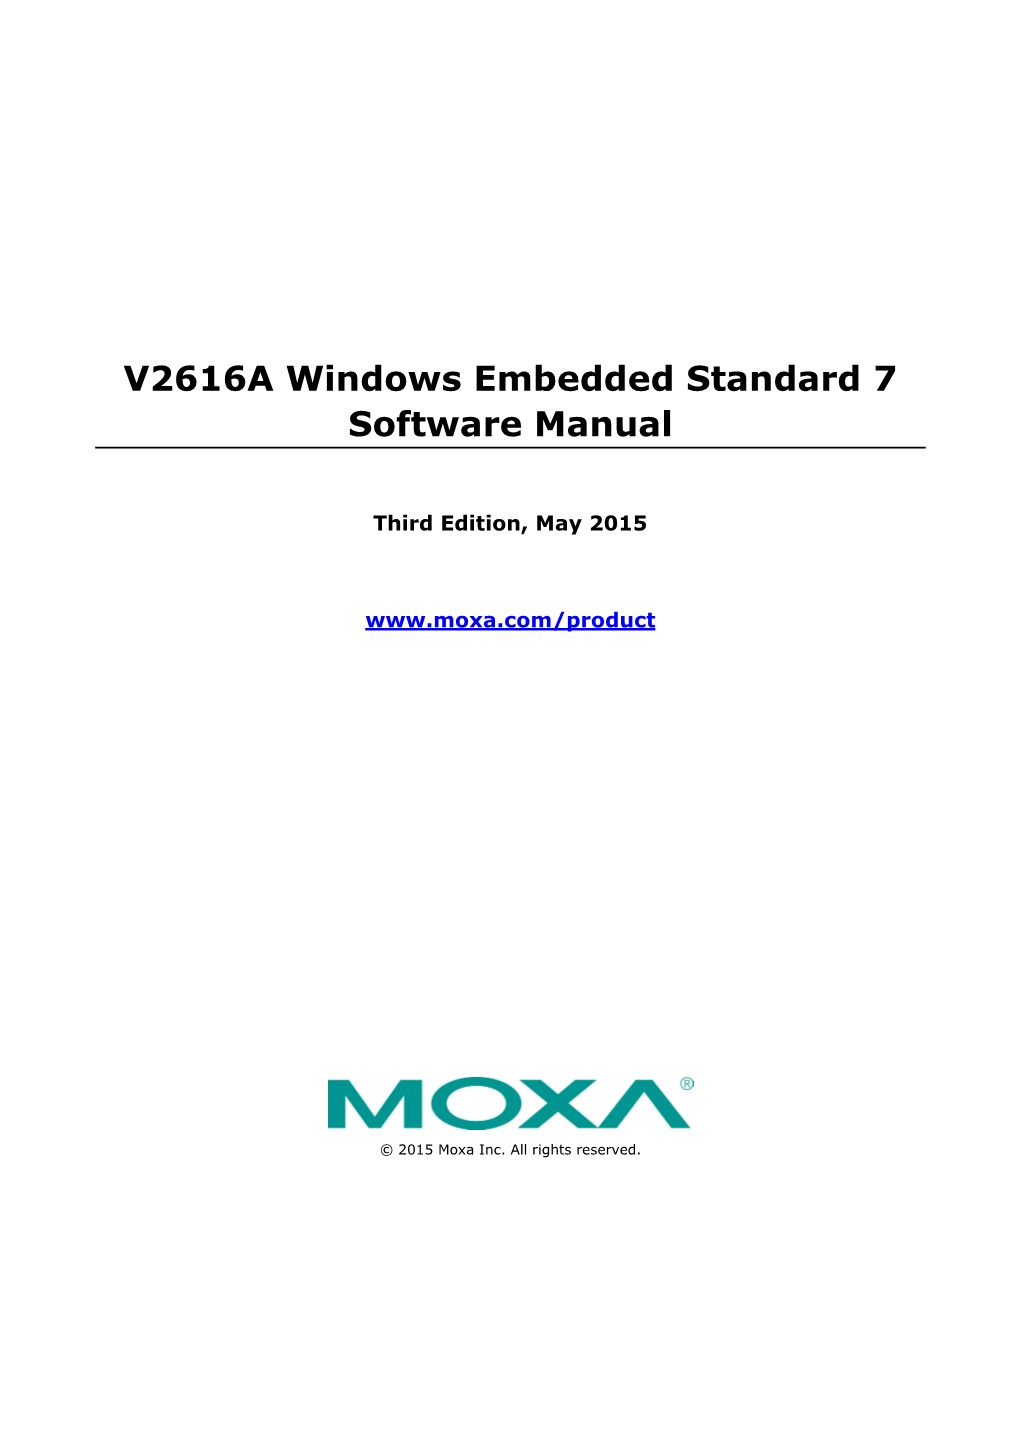 V2616A Windows Embedded Standard 7 Software Manual